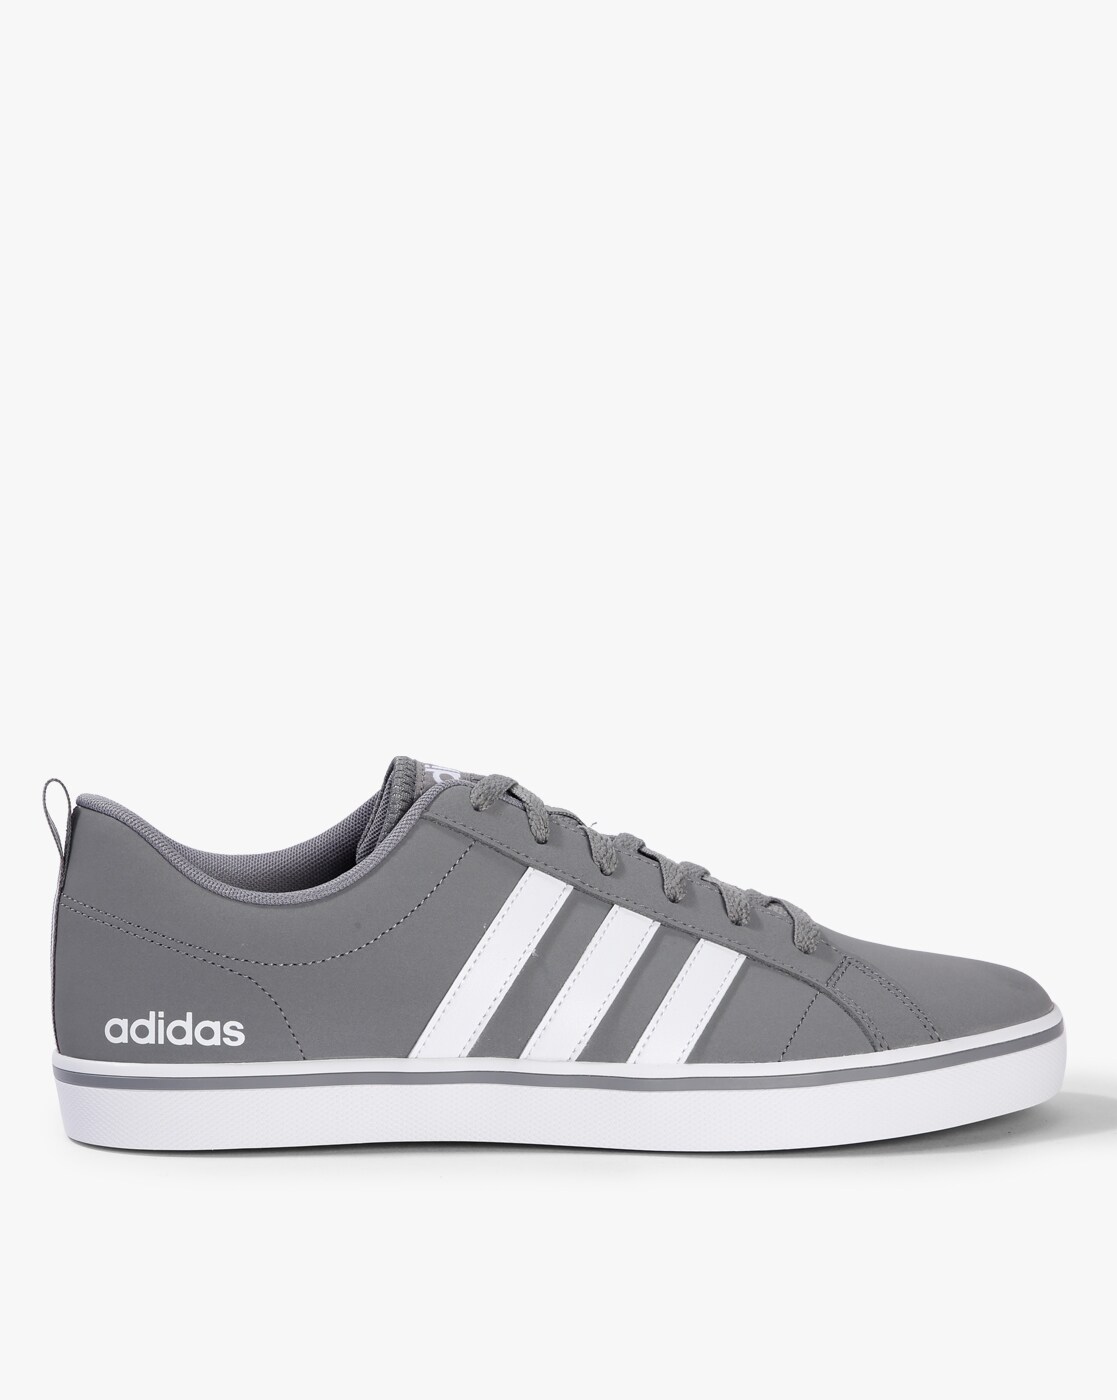 adidas sneakers grey